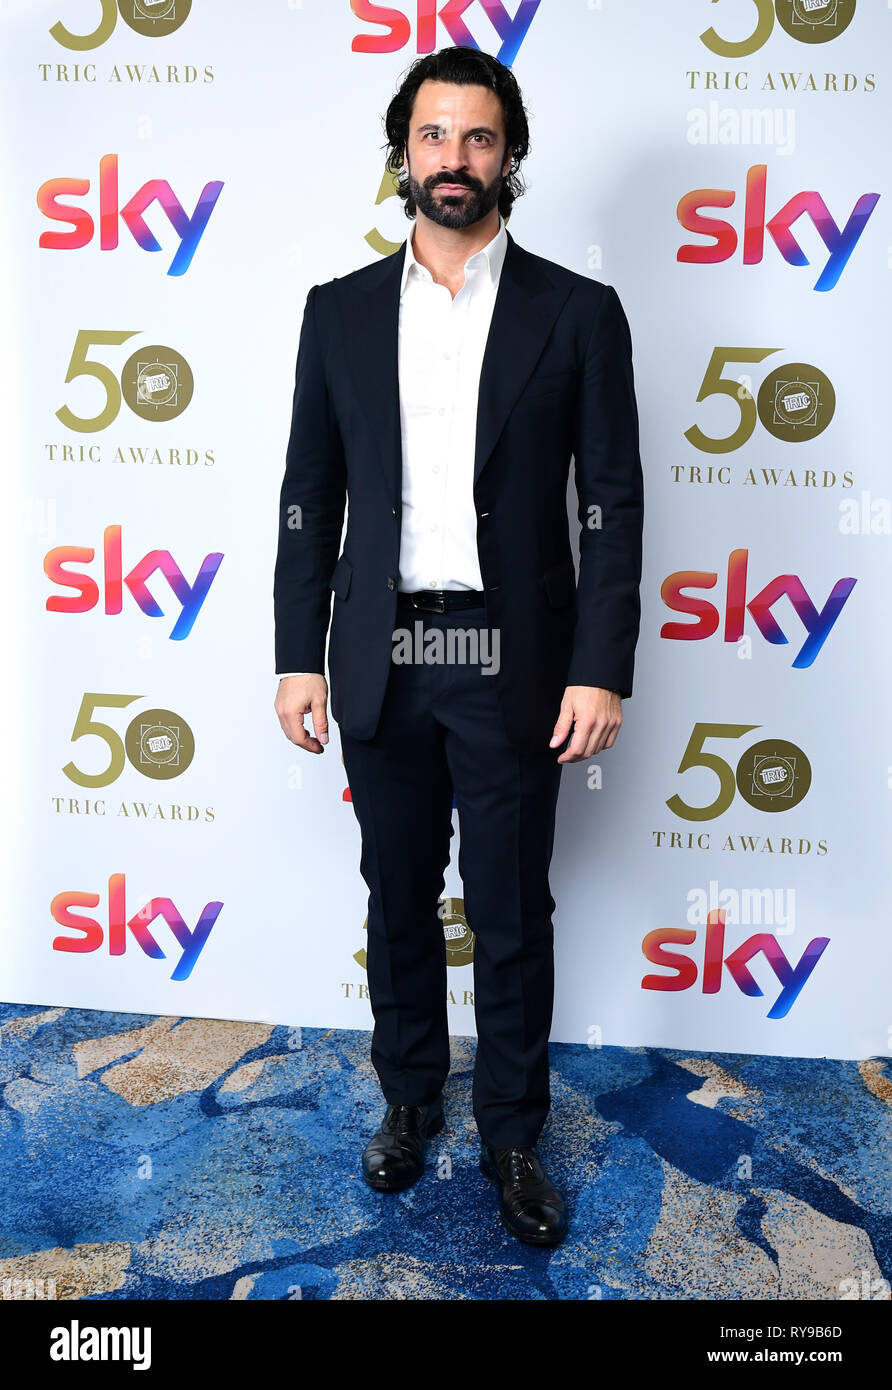 Christian Vit attending the TRIC Awards 2019 50th Birthday Celebration held at the Grosvenor House Hotel, London. Stock Photo